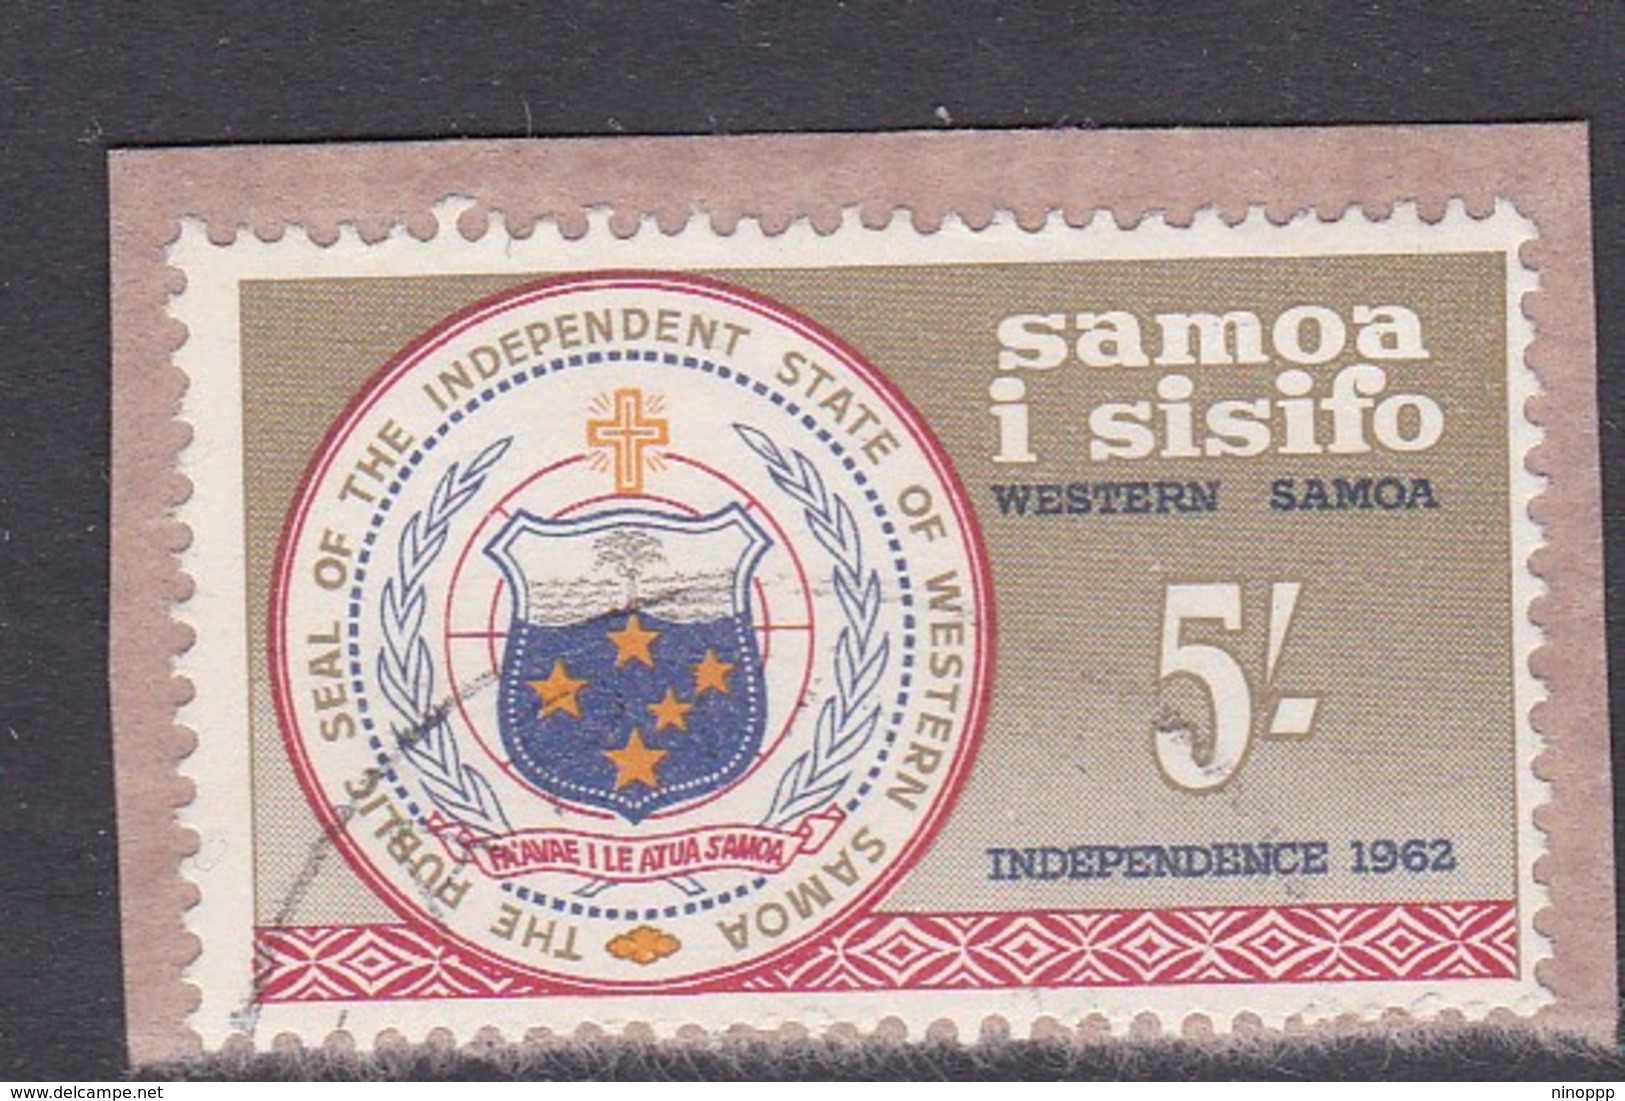 Samoa SG 248 1962 Independence,Five Shillings, Used - Samoa